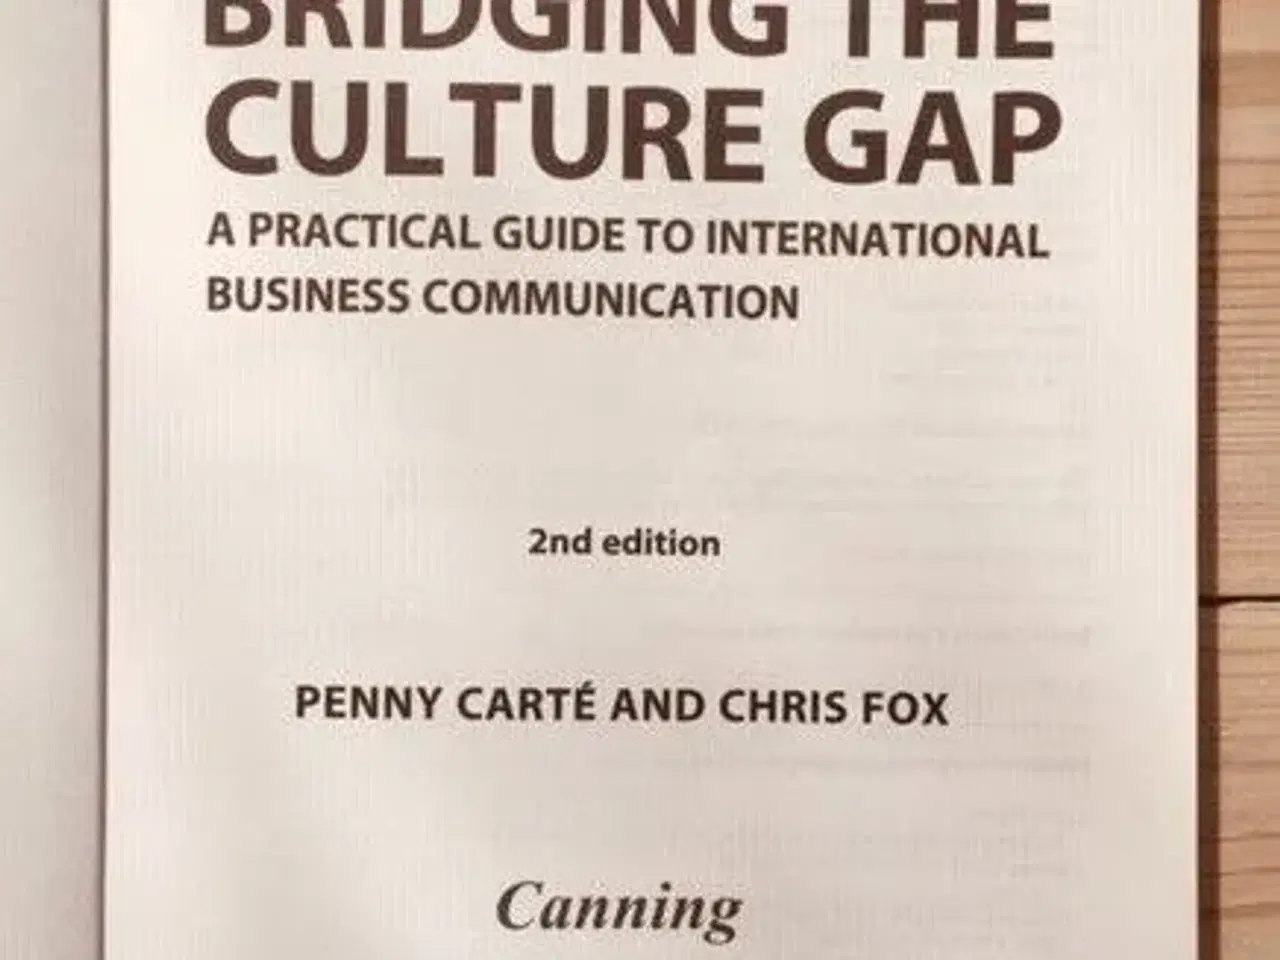 Billede 2 - Bridging the culture gap, 2nd edition, Penny Carté